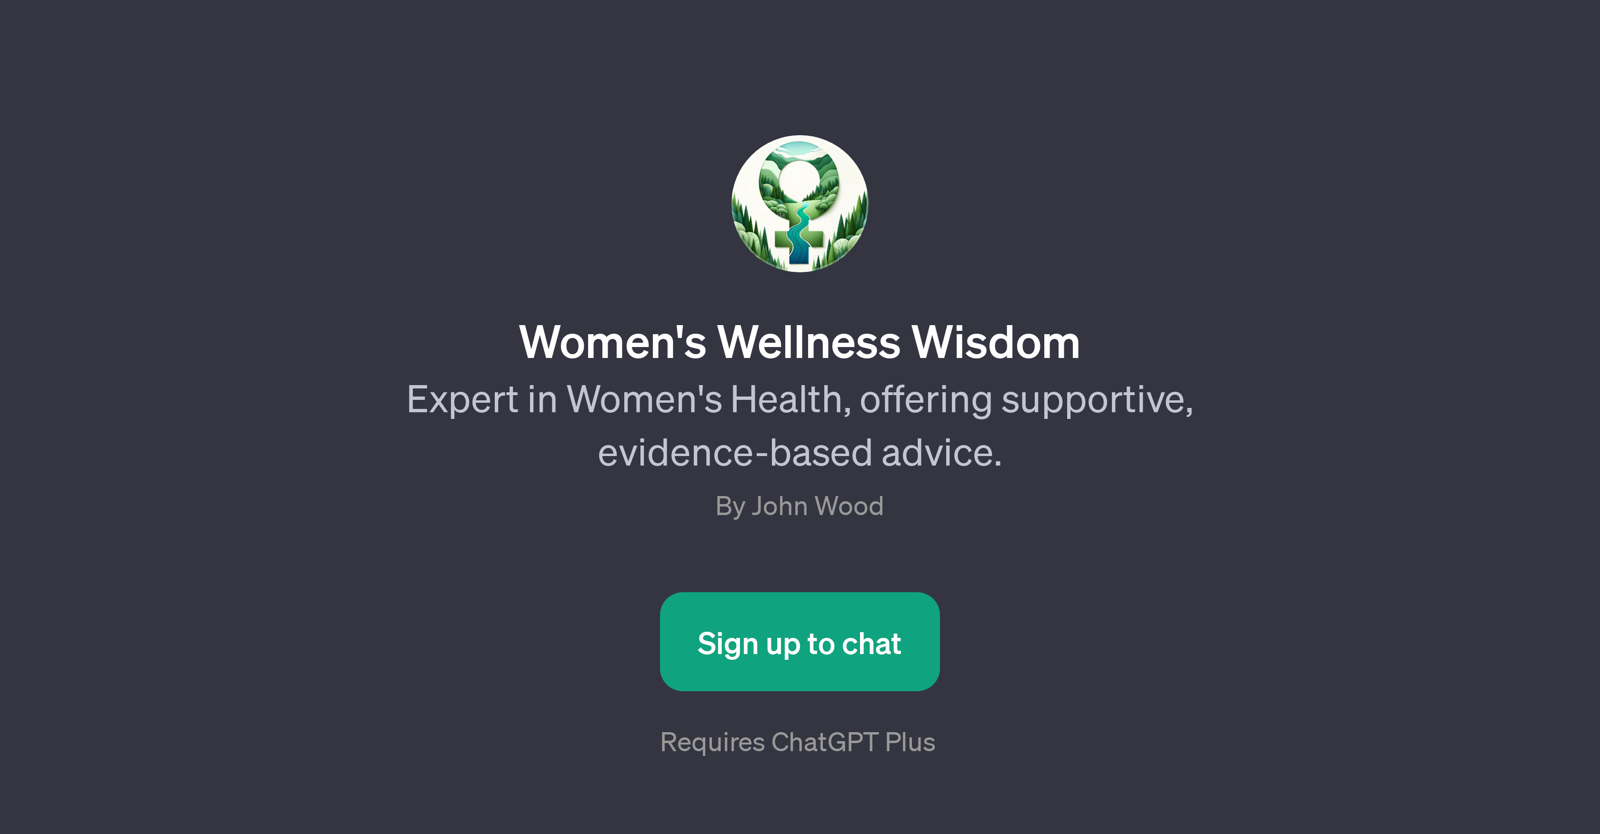 Women's Wellness Wisdom website